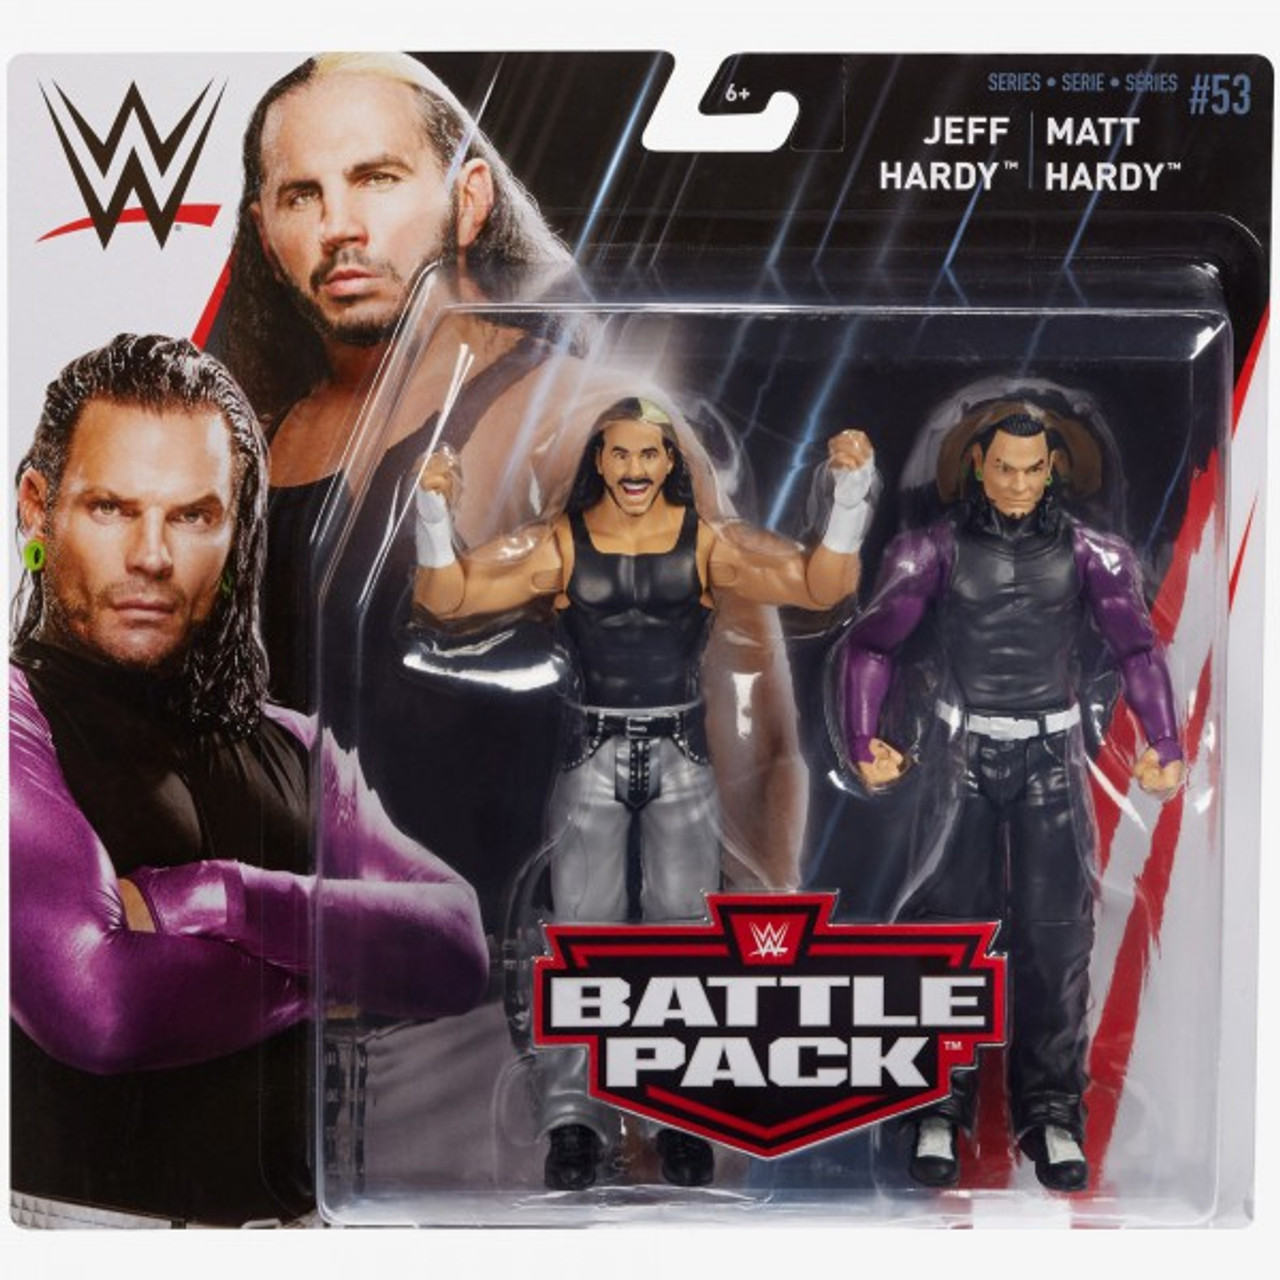 Wwe Wrestling Battle Pack Series 53 Matt Jeff Hardy 6 Action Figure 2 Pack Hardy Boyz Mattel Toys Toywiz - the hardy boyz roblox song id